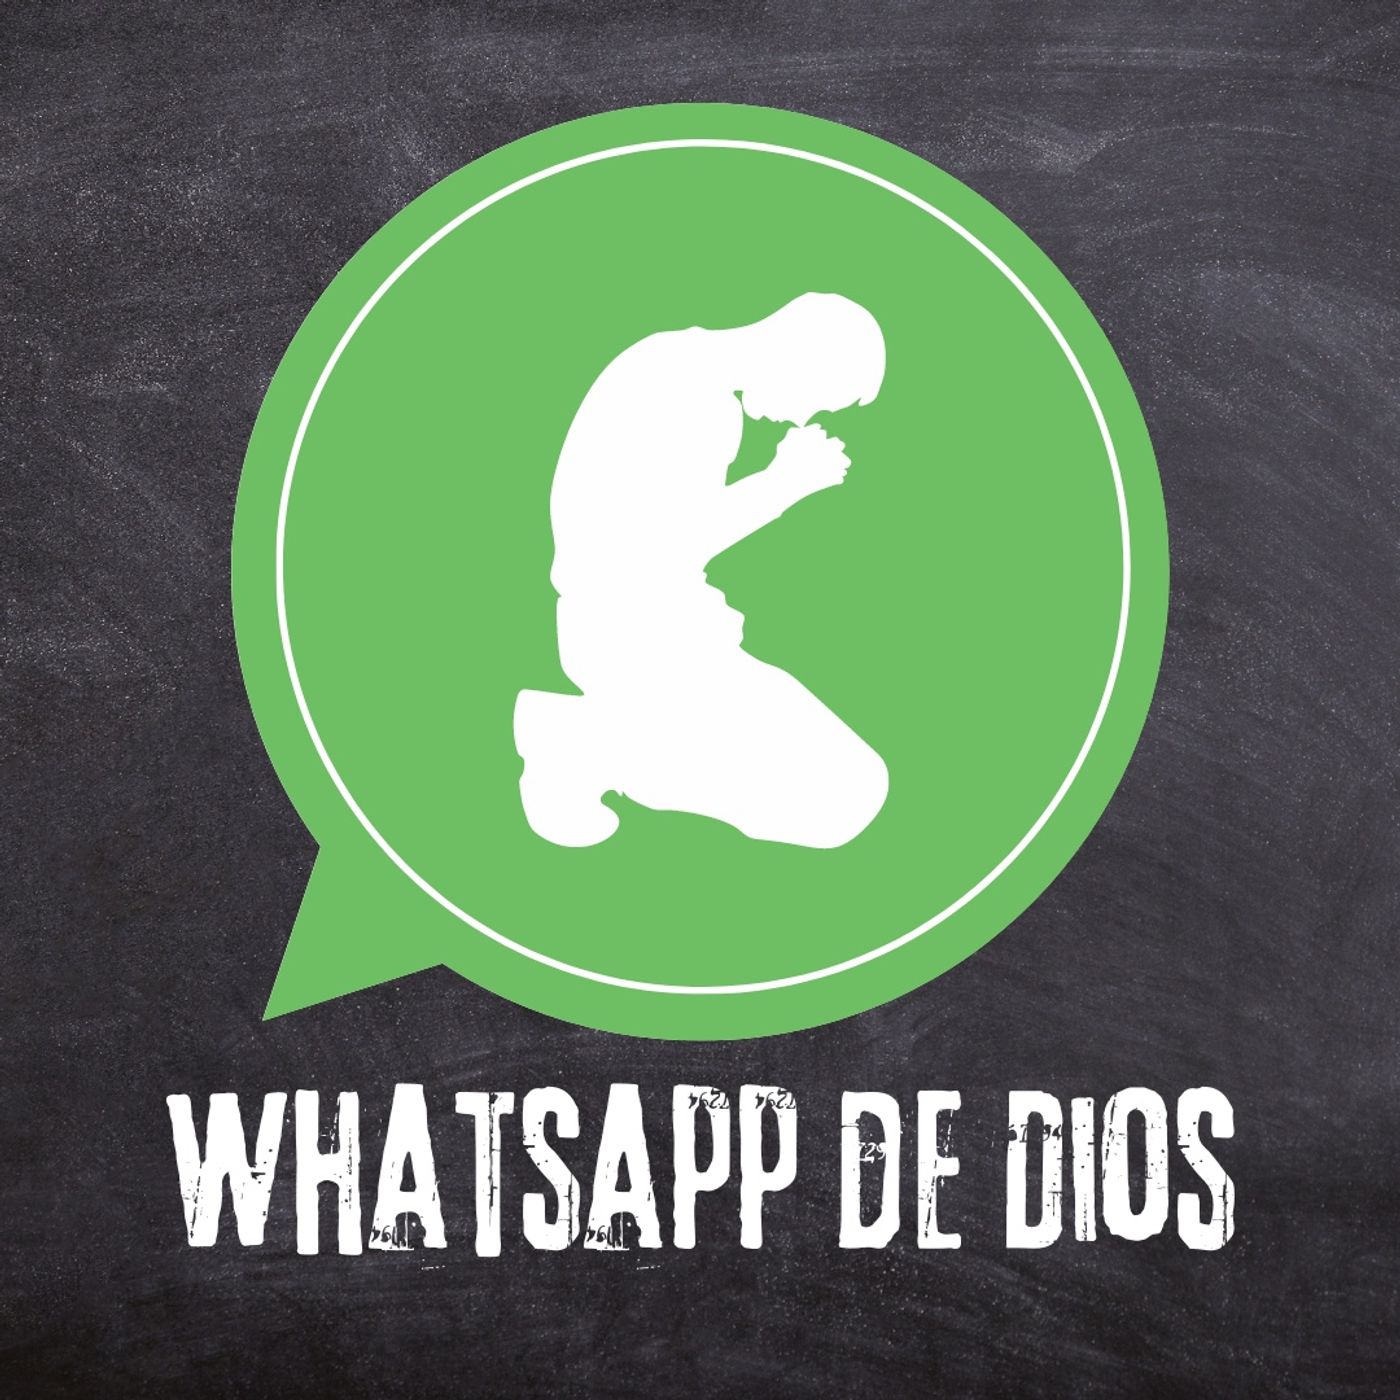 WhatsApp de Dios